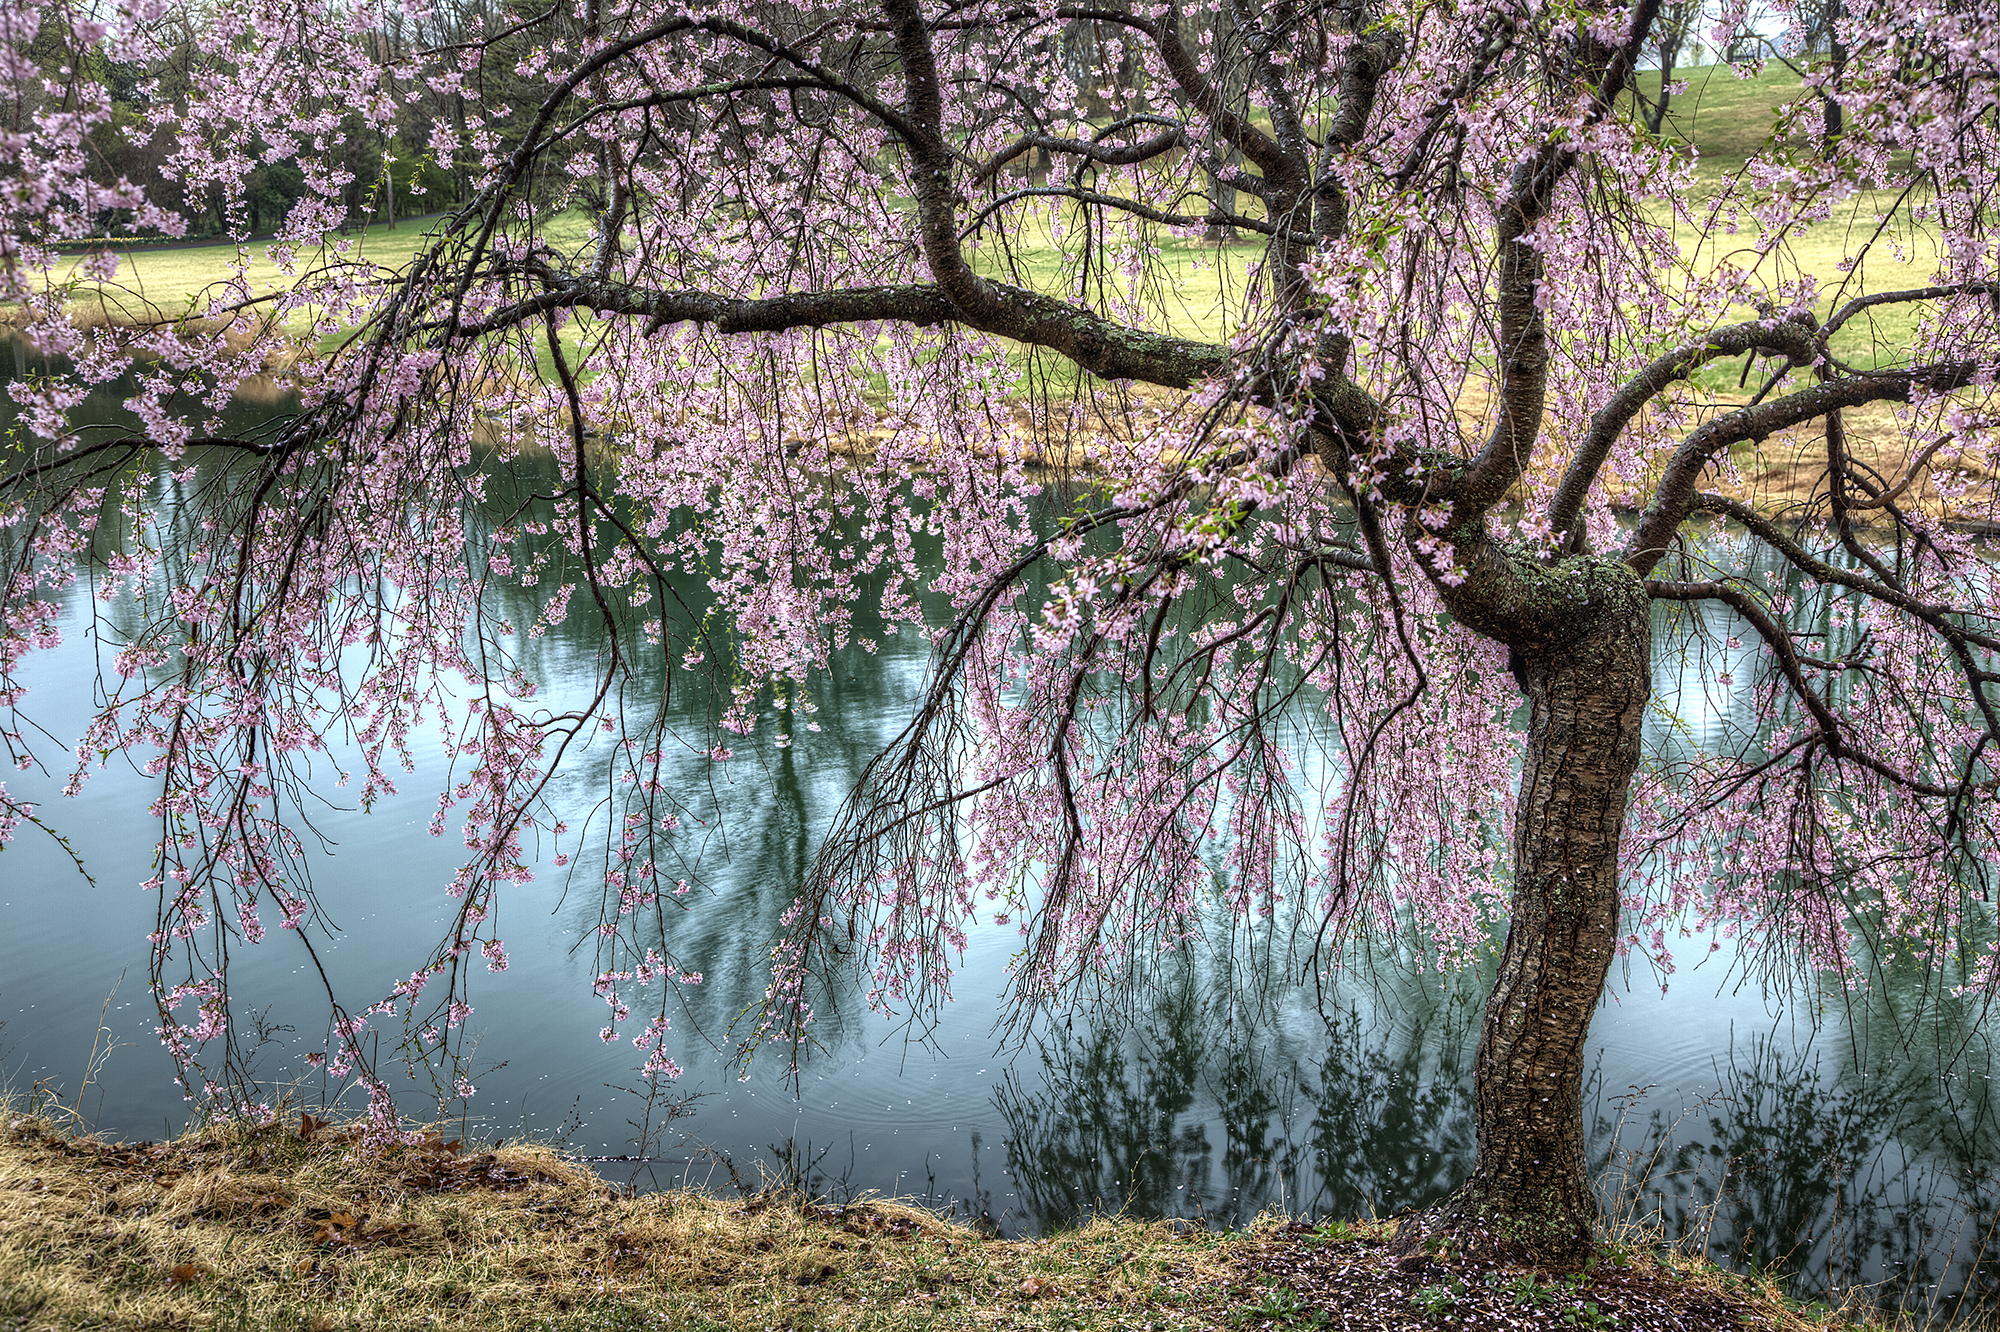 Cherry blossom tree photo